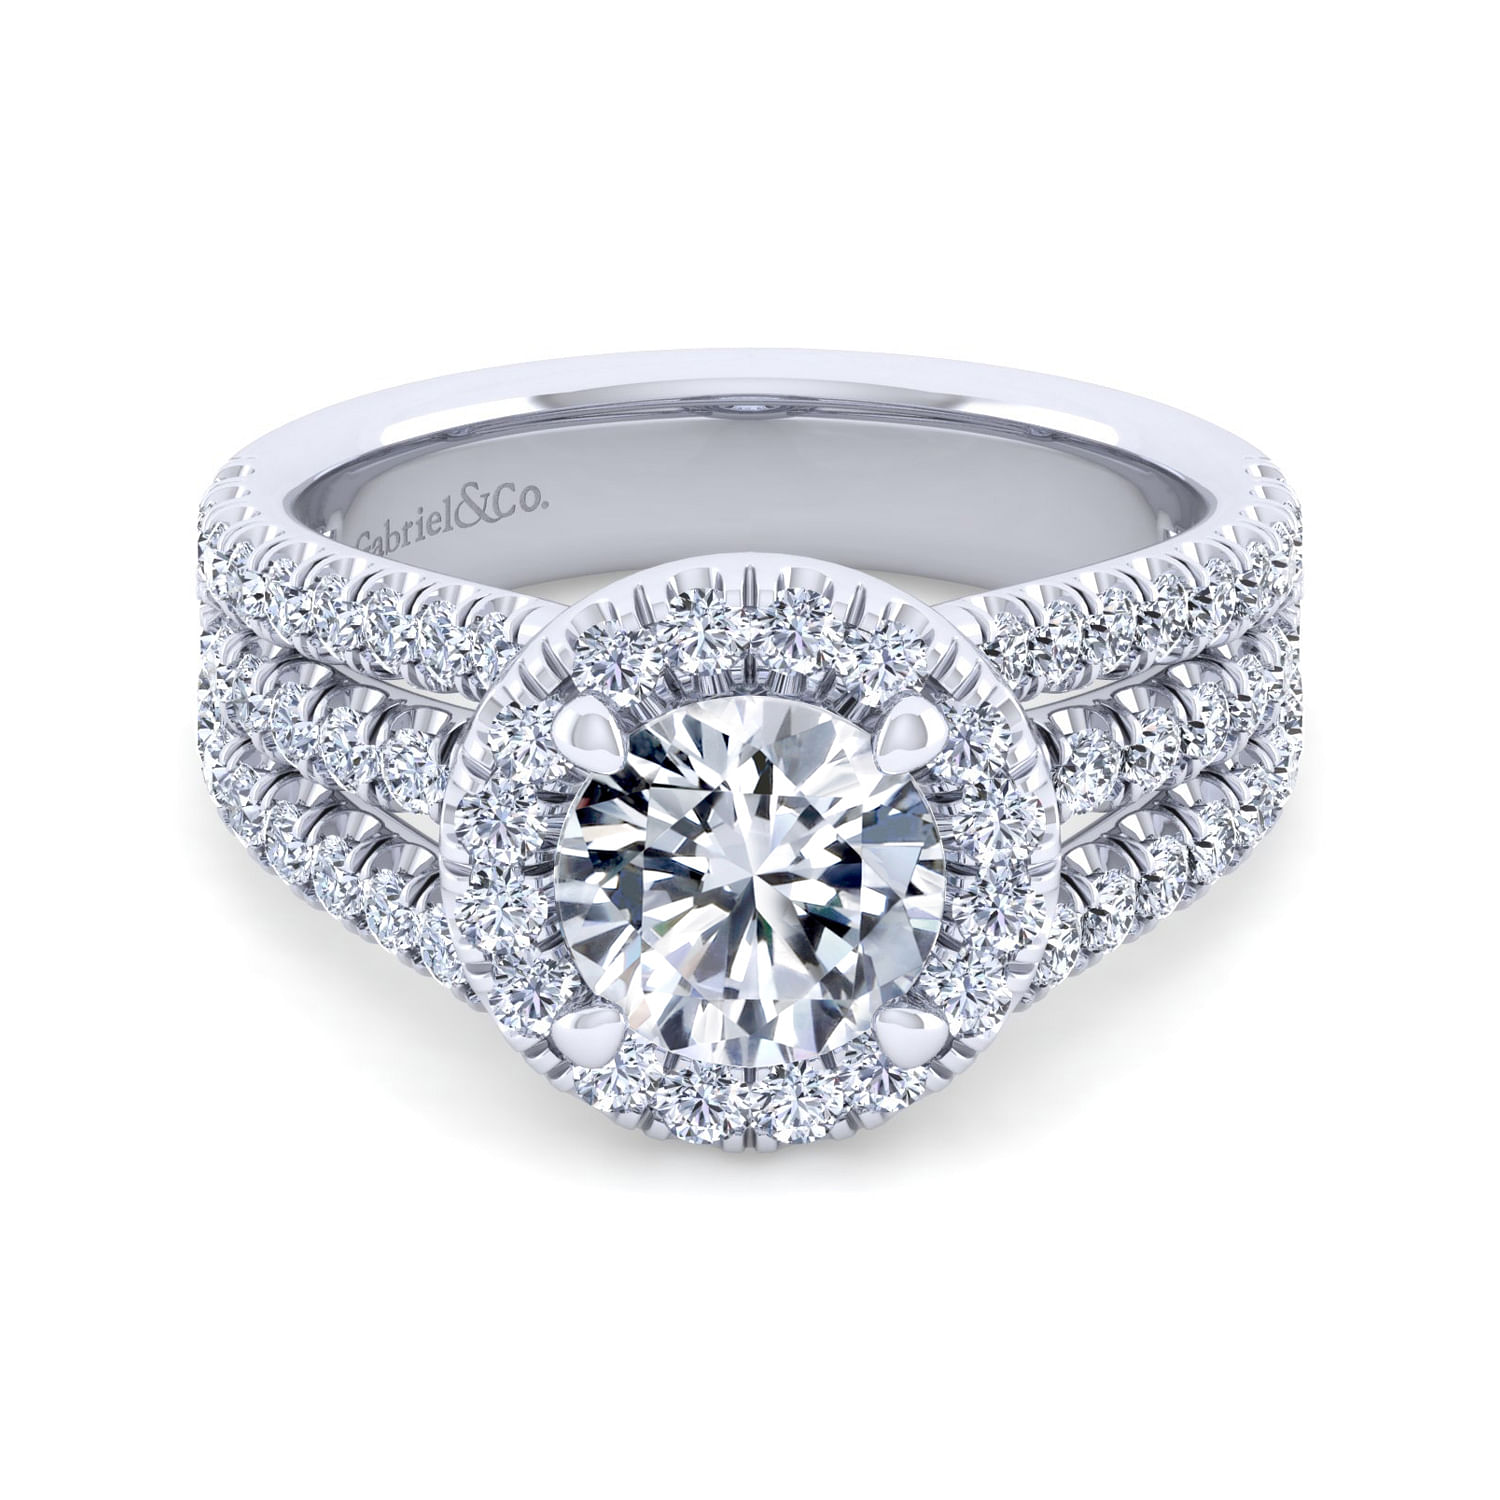 Sabrina - 14K White Gold Round Halo Diamond Engagement Ring